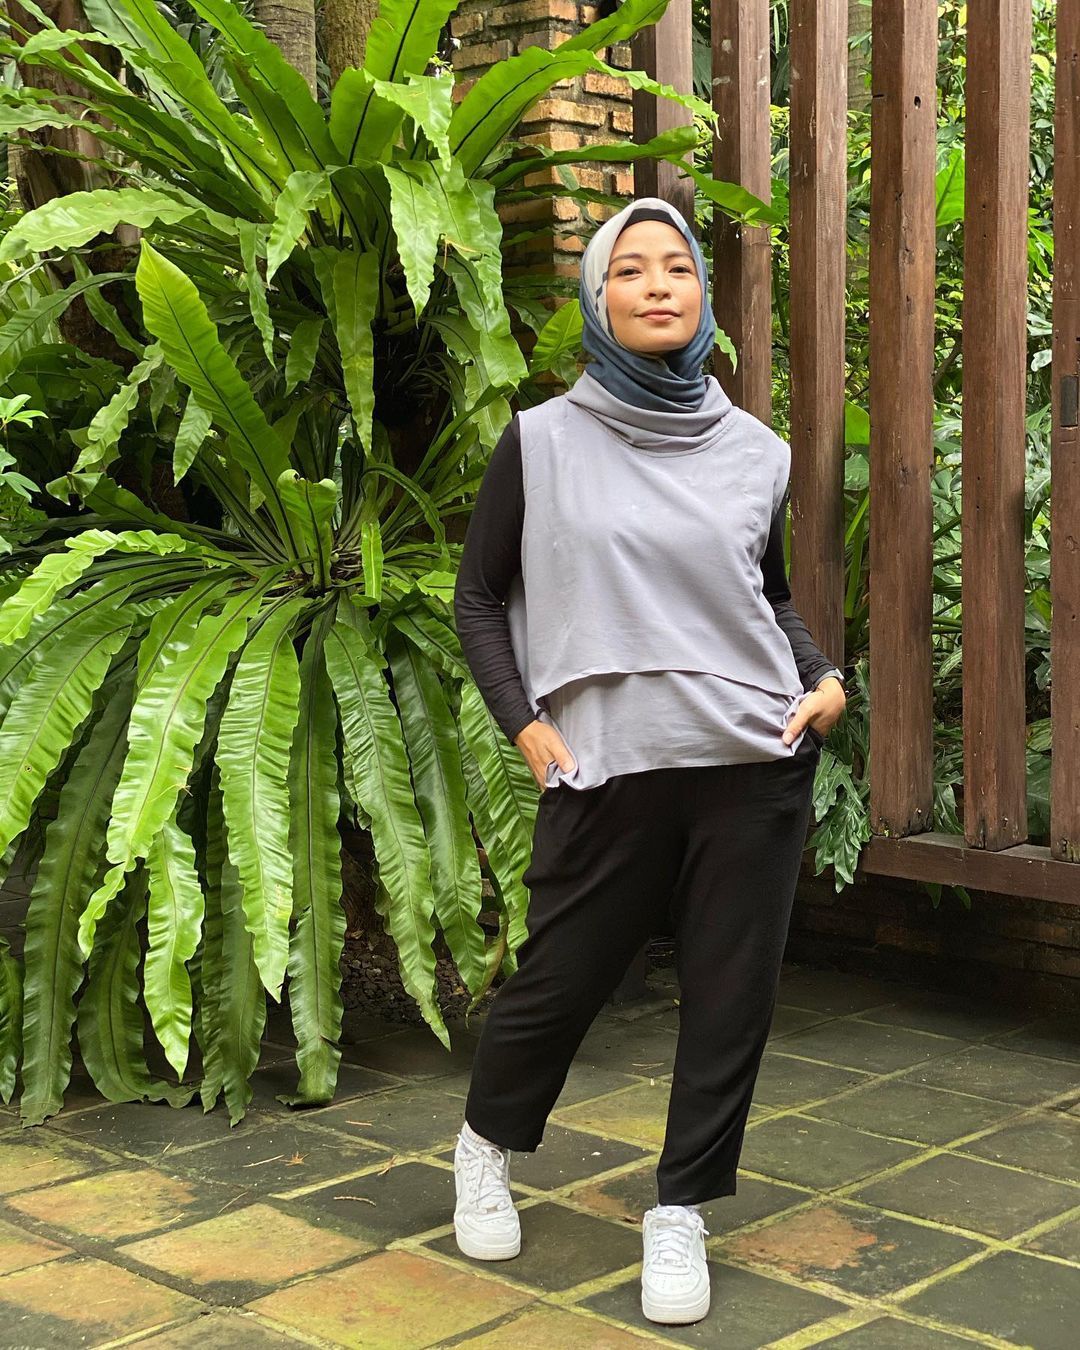 Para Publik Figur Indonesia yang Miliki Gaya Hijab Boyish, Kece!